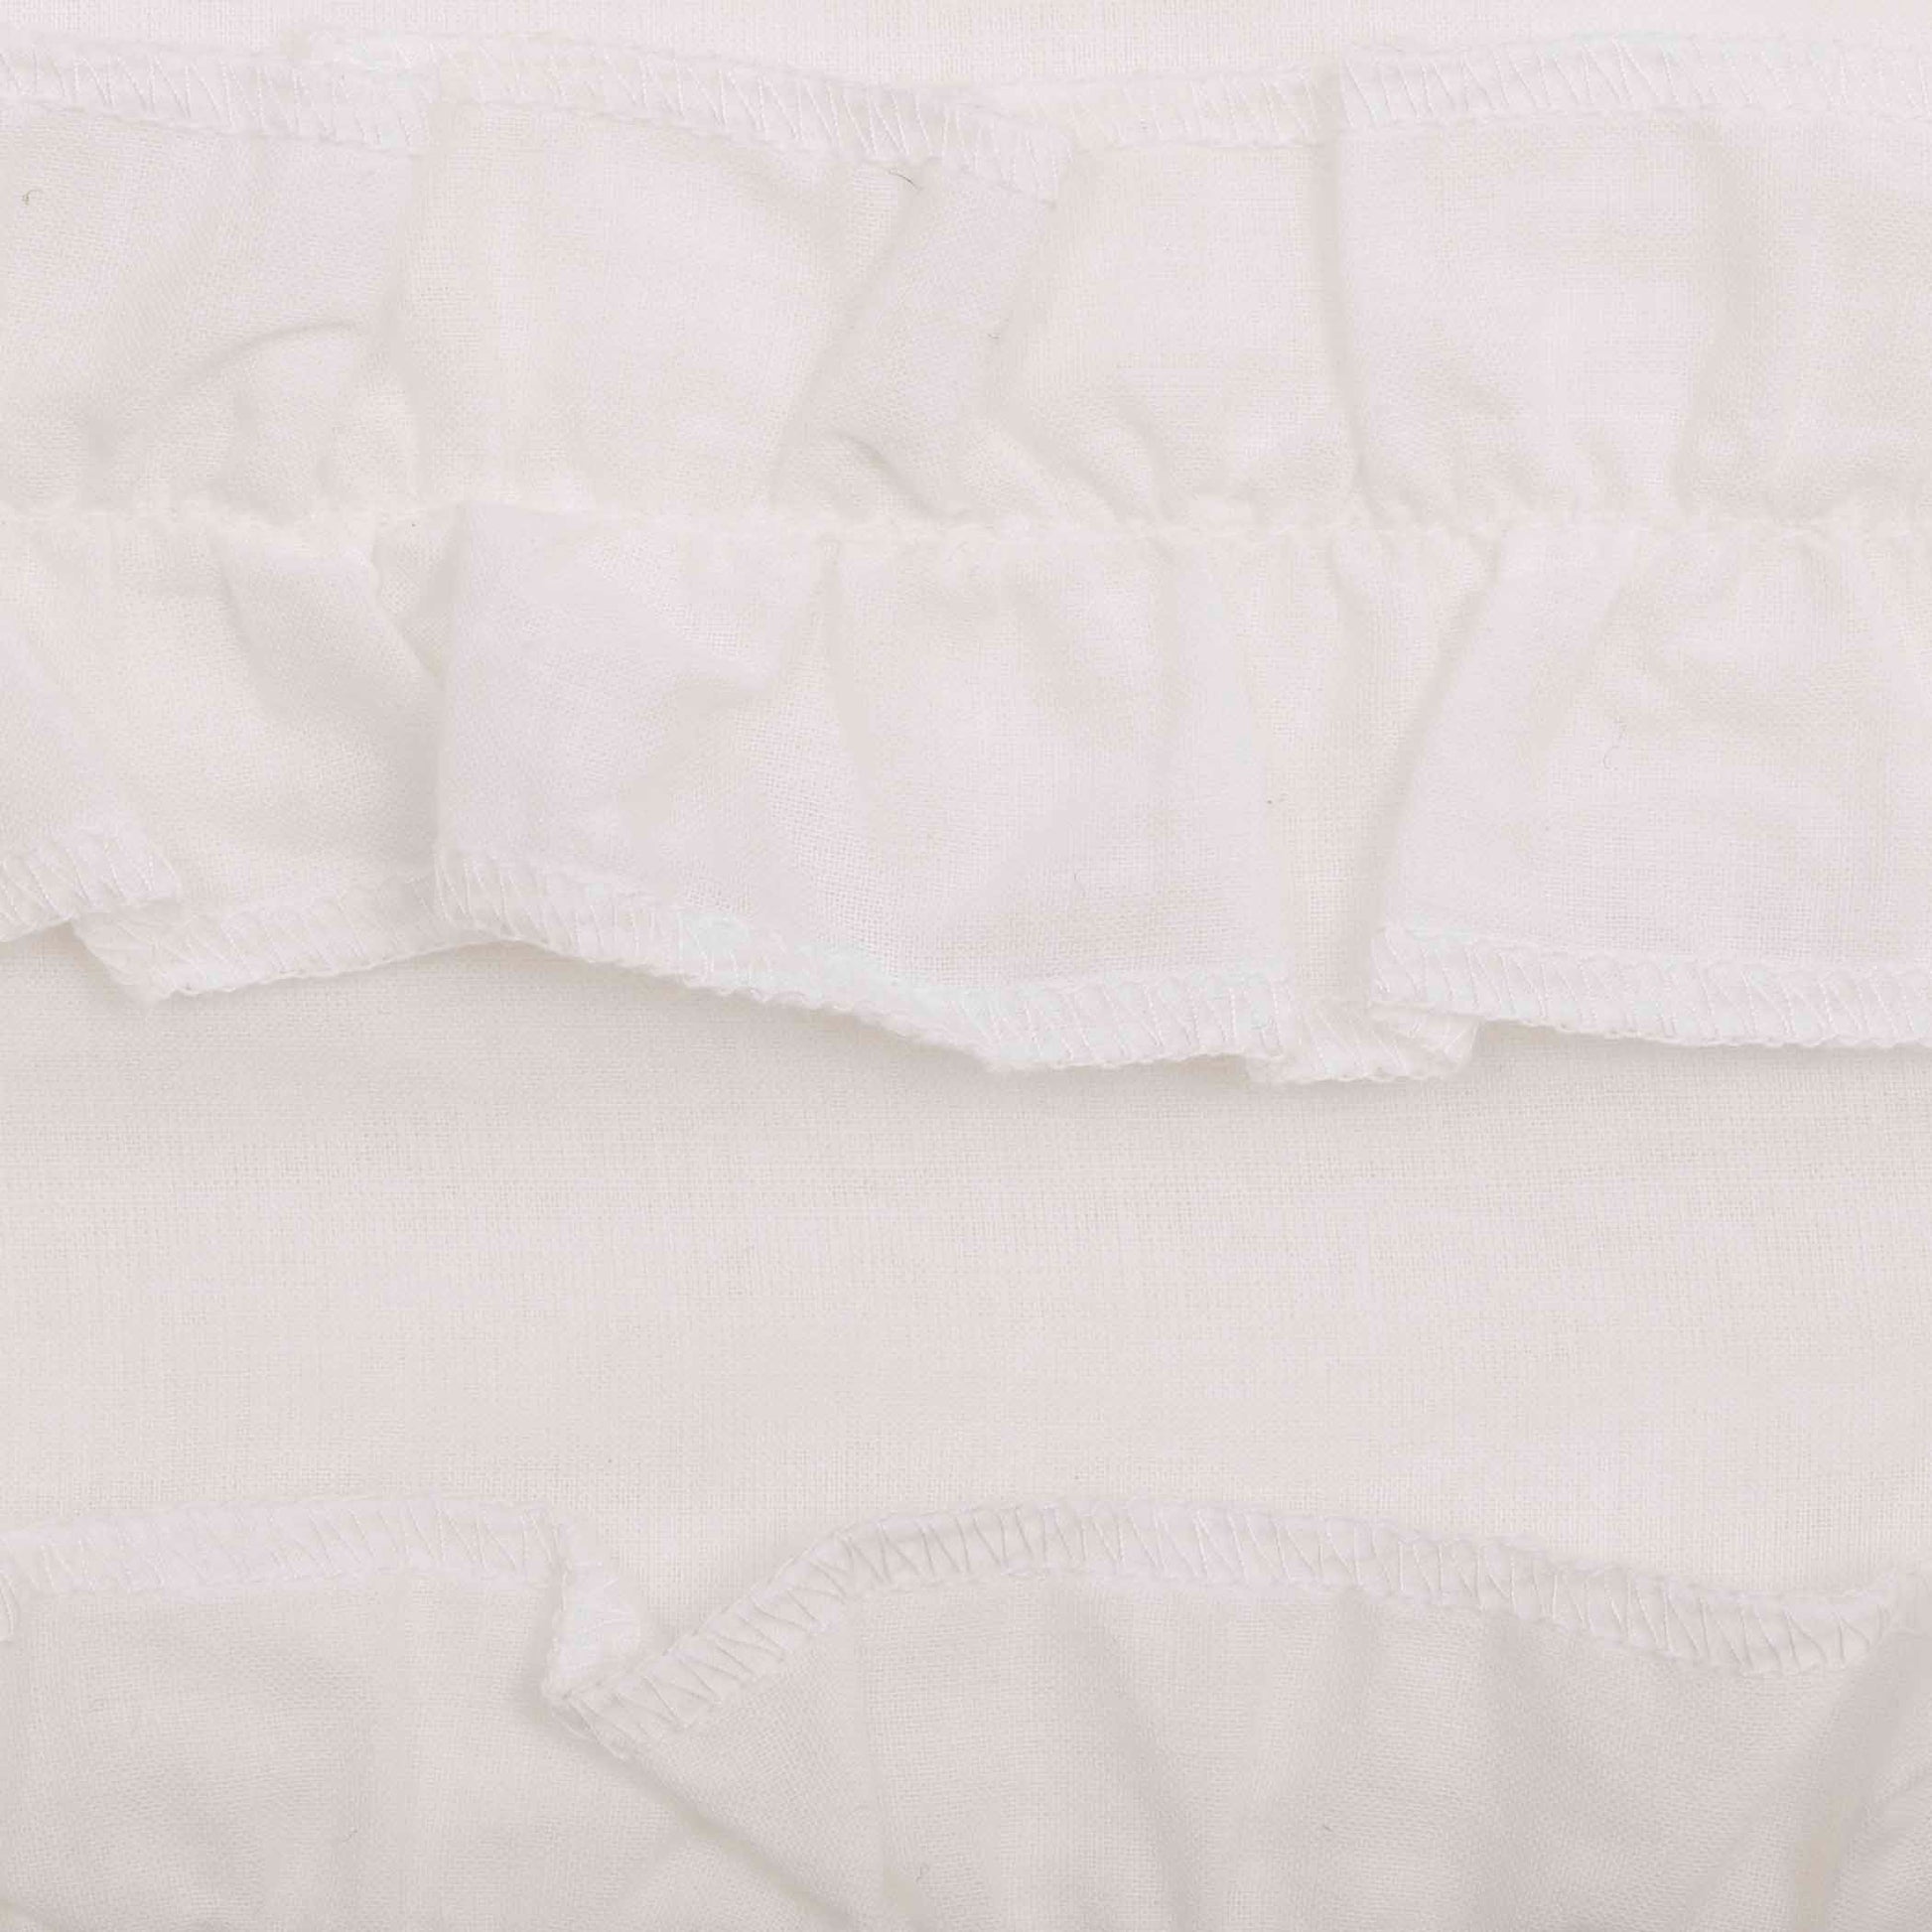 52001-White-Ruffled-Sheer-Petticoat-Valance-16x72-image-8